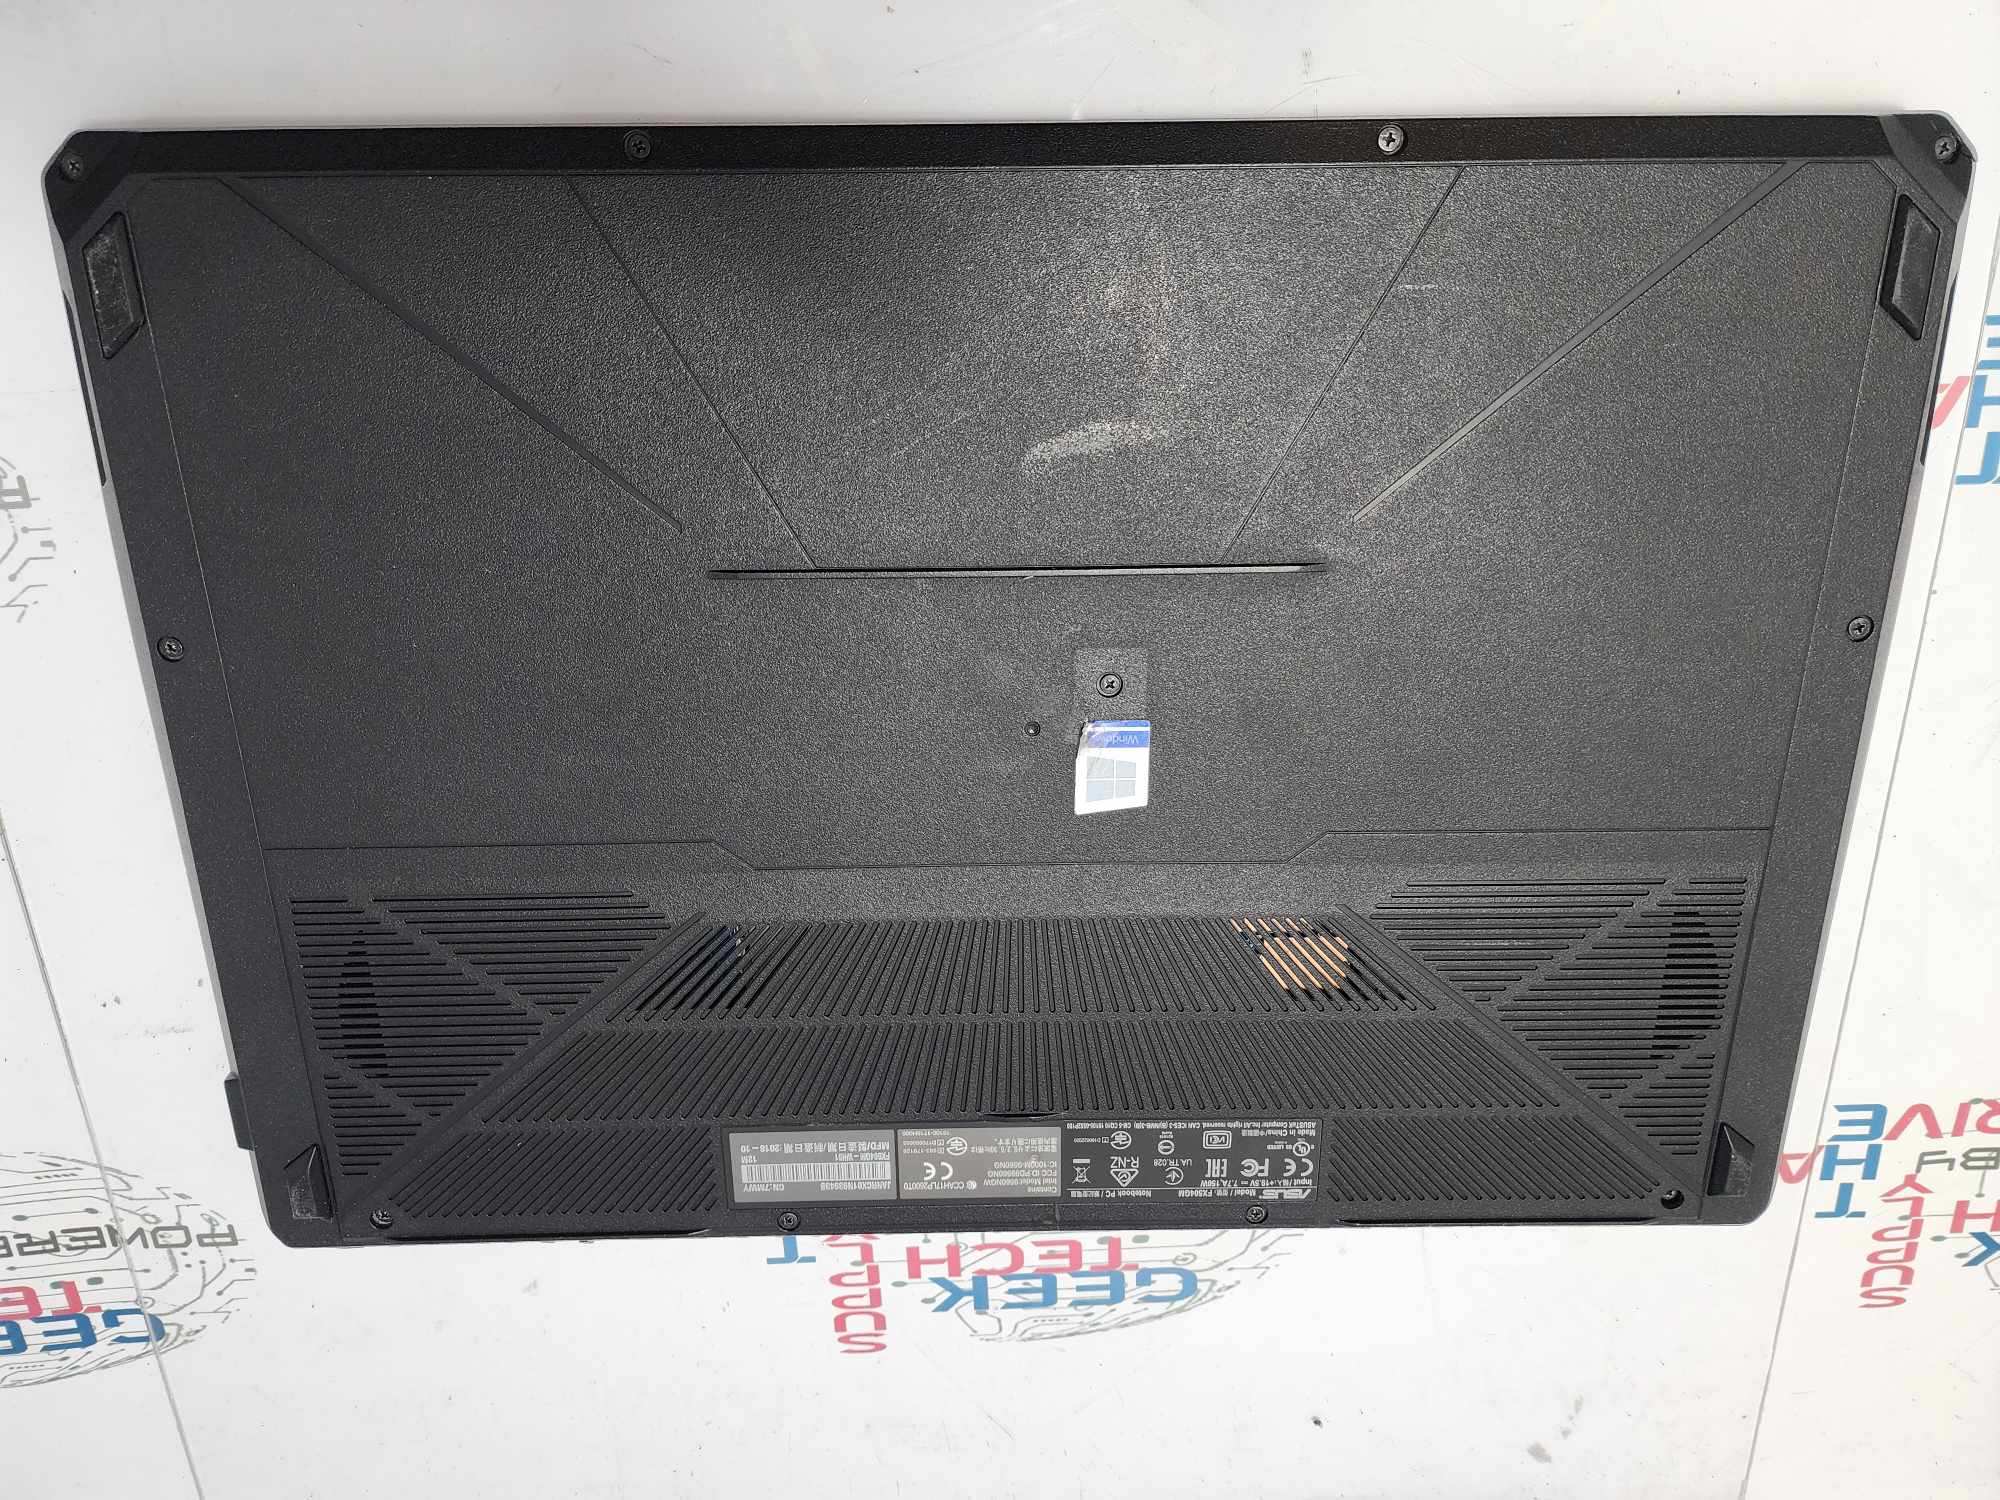 Asus FX504GM Gaming Laptop i5-8300H GTX 1060 8GB DDR4 256gb Black | B Grade - Geek Tech